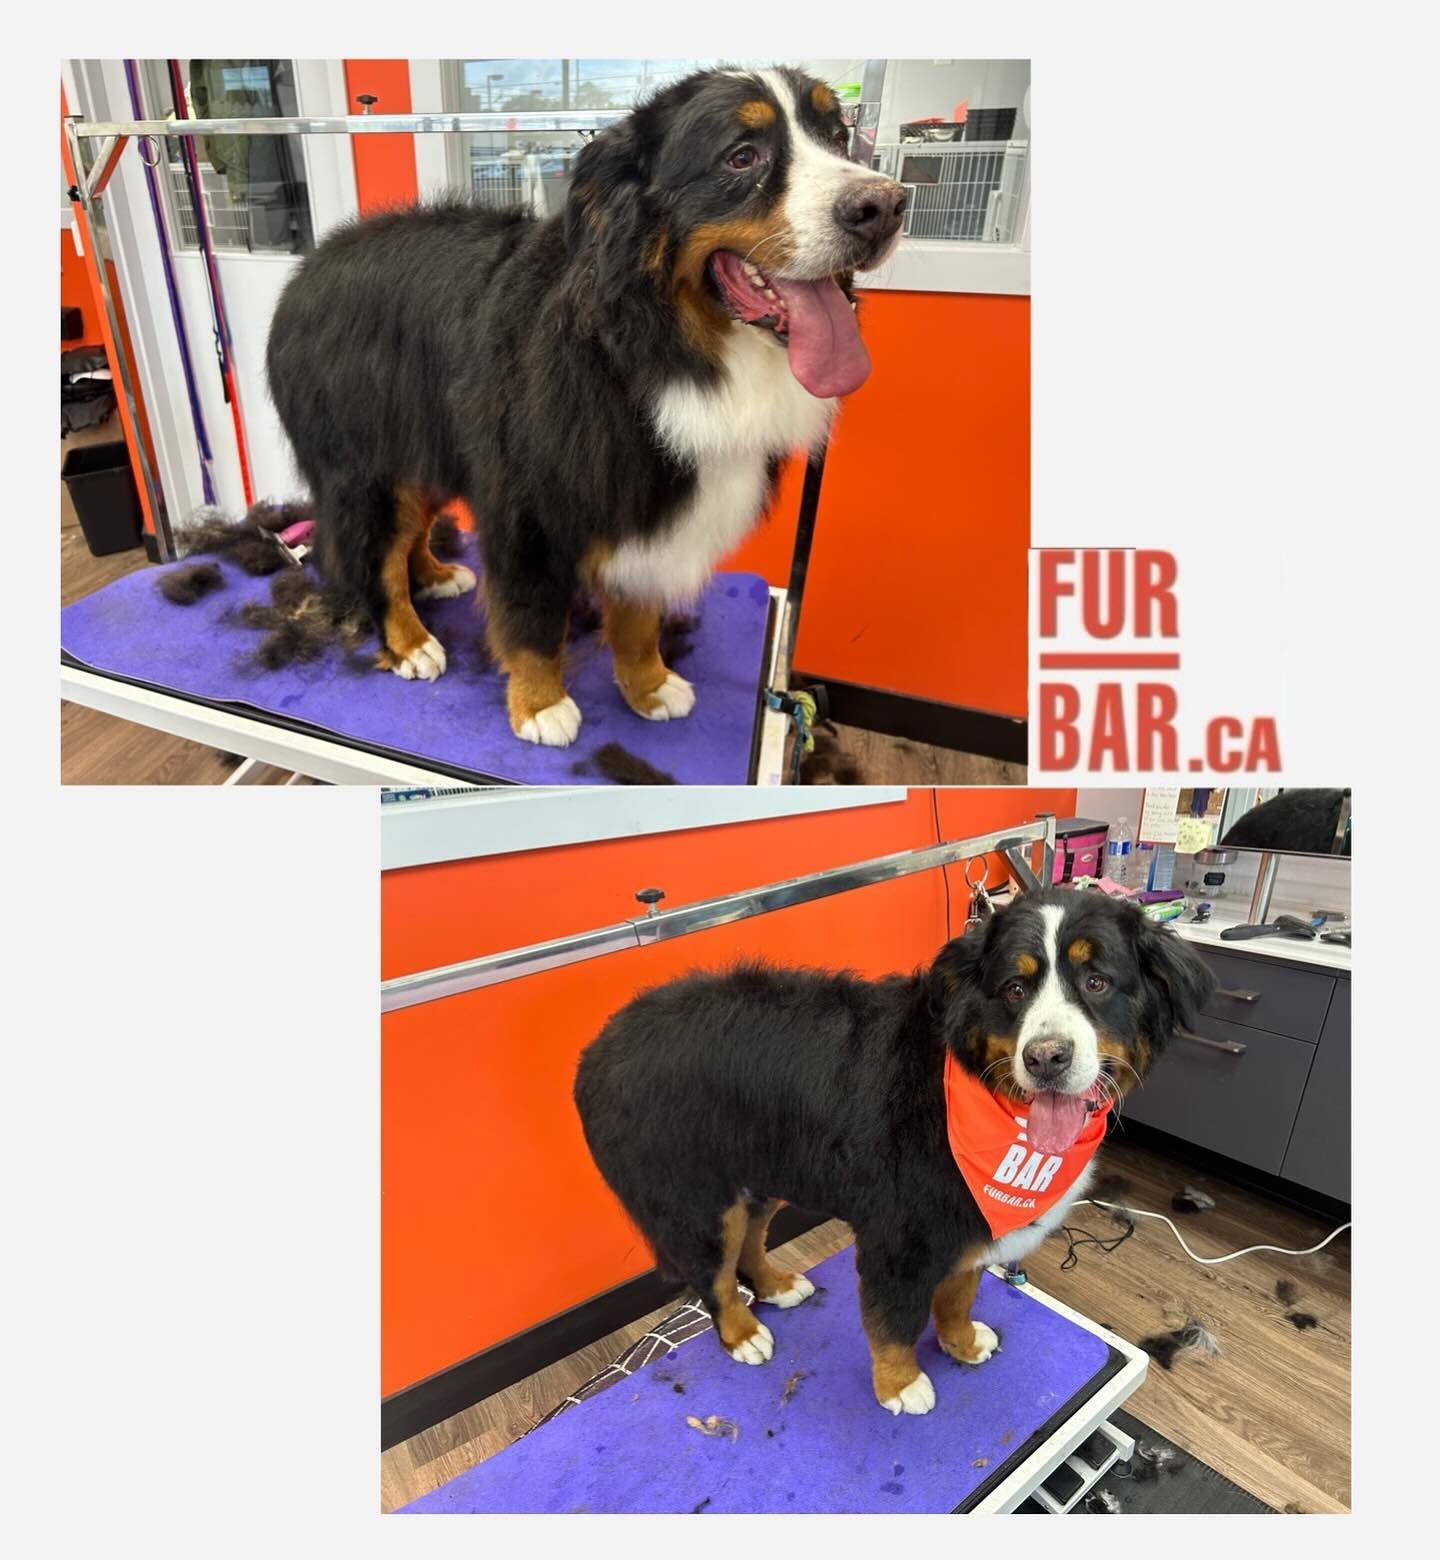 Otis before and after is bombastic!!
Tidy done by 𝗠𝗲𝗹𝗶𝘀𝘀𝗮
#furbar #bernese #tidy #furbarpetgrooming #toronto #northyork #cutie #bigboy #bath #doglover #salon #groomingsalon